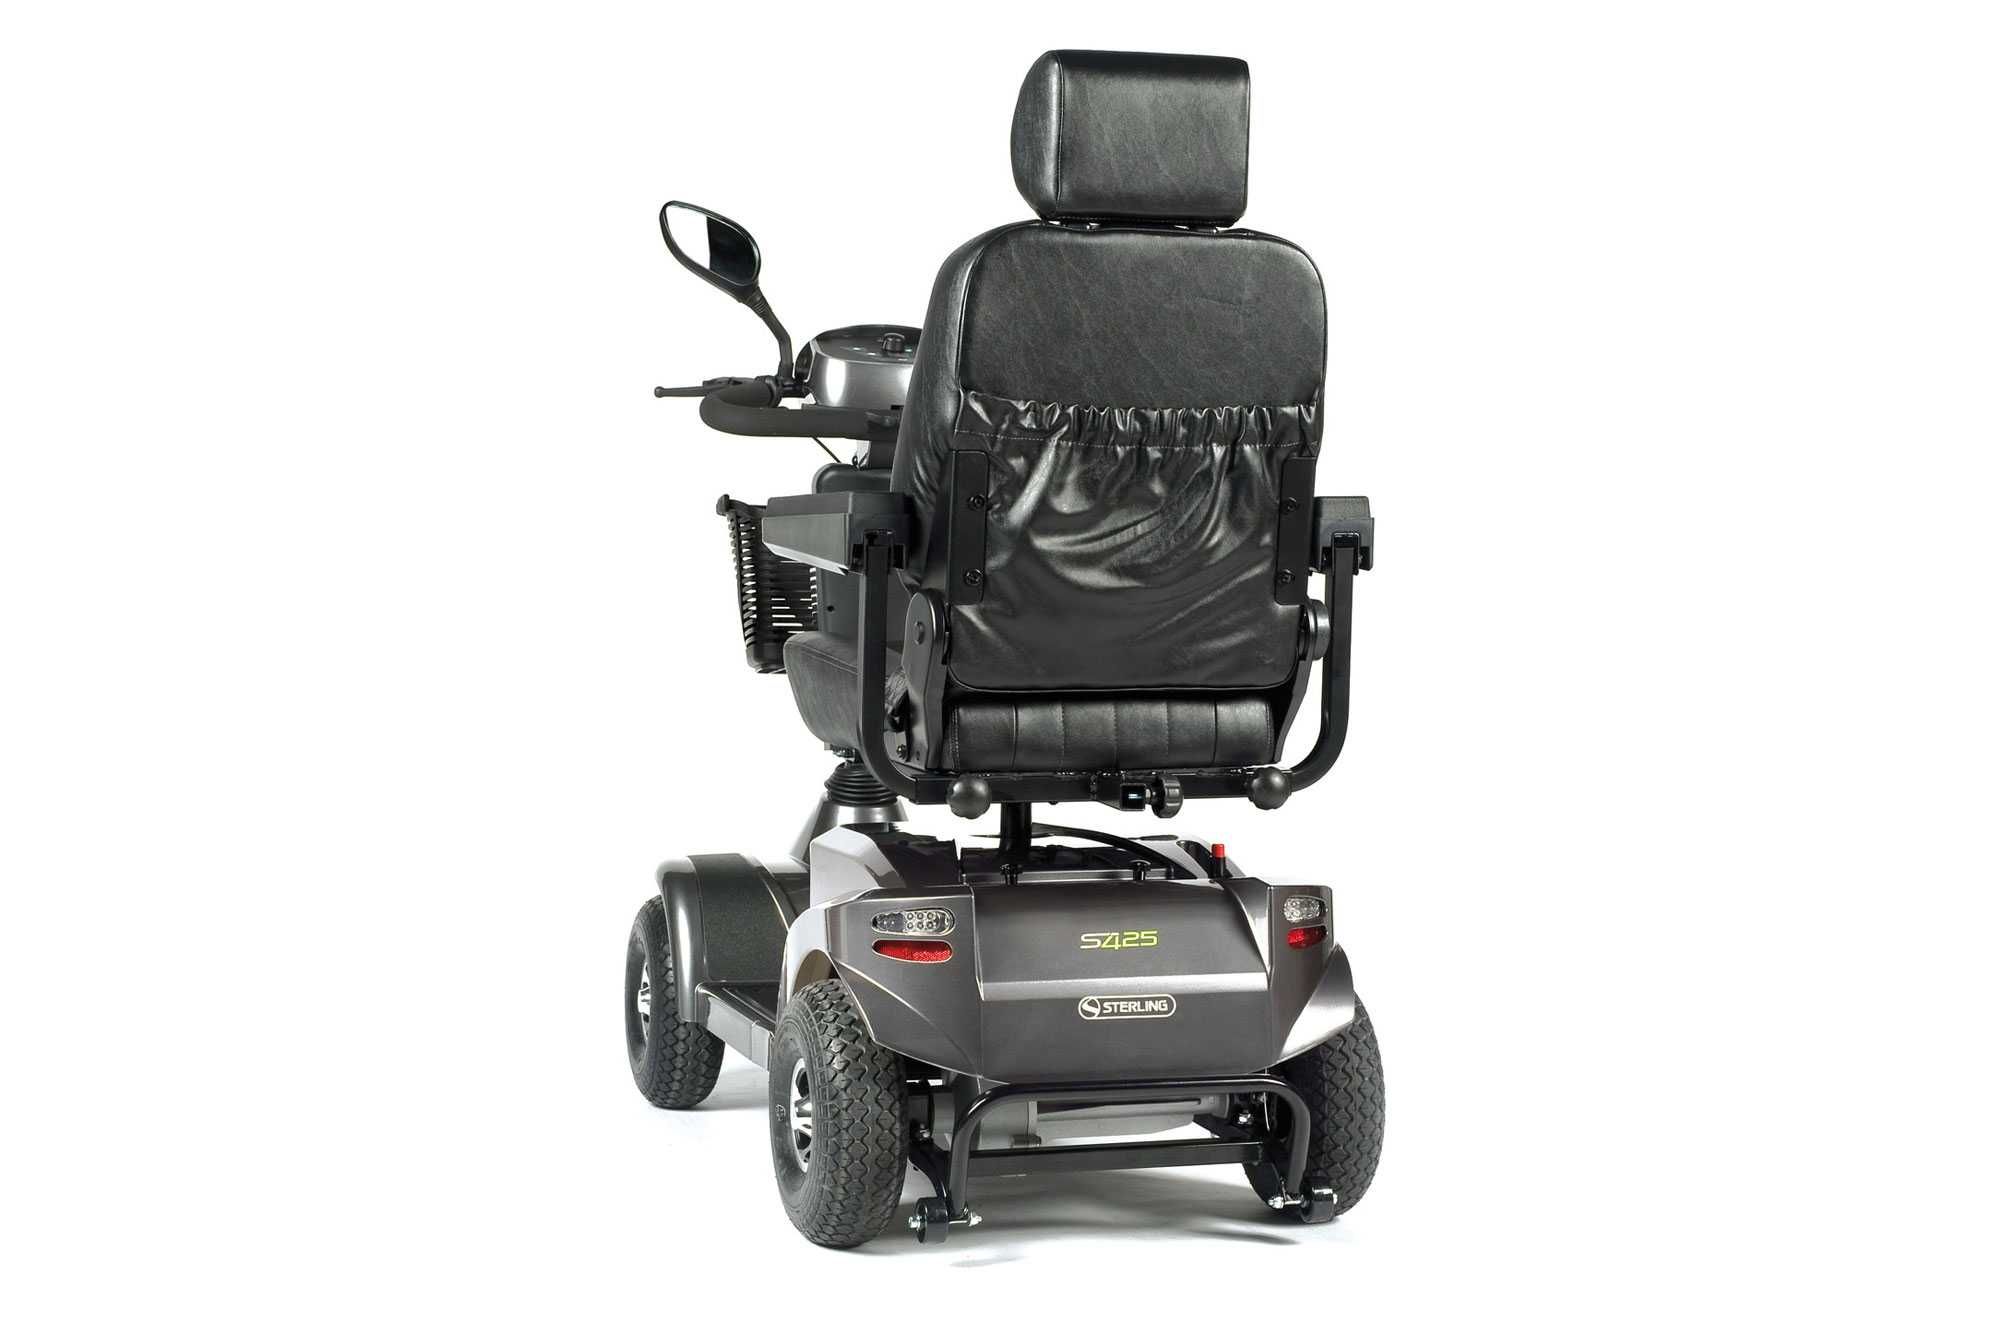 Skuter inwalidzki elektryczny NOWY szybki dla seniora  STERLING S425